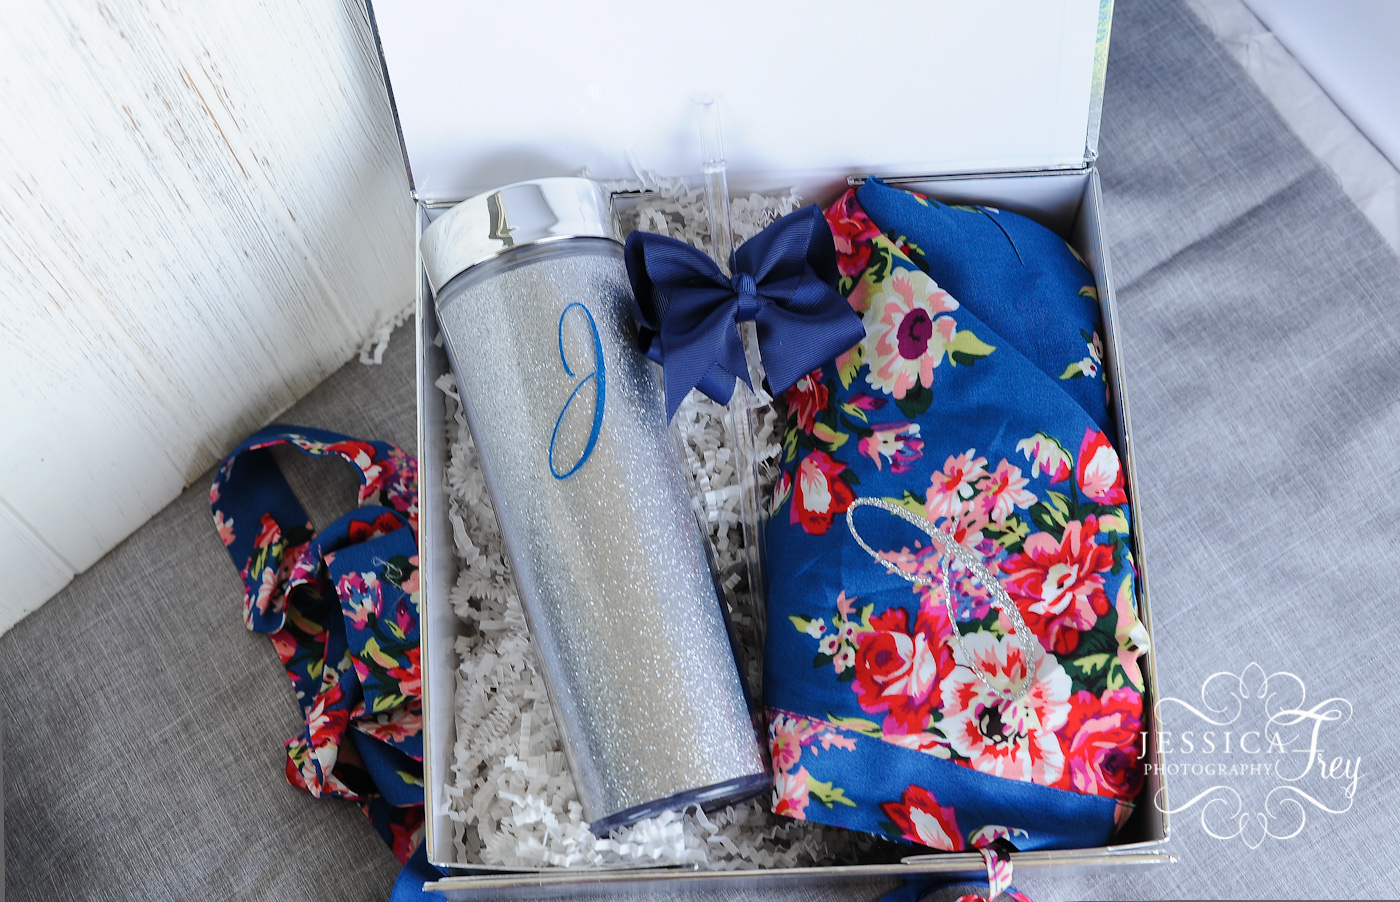 bridesmaid gift ideas, bridesmaid robes, awesome bridesmaid gift box idea